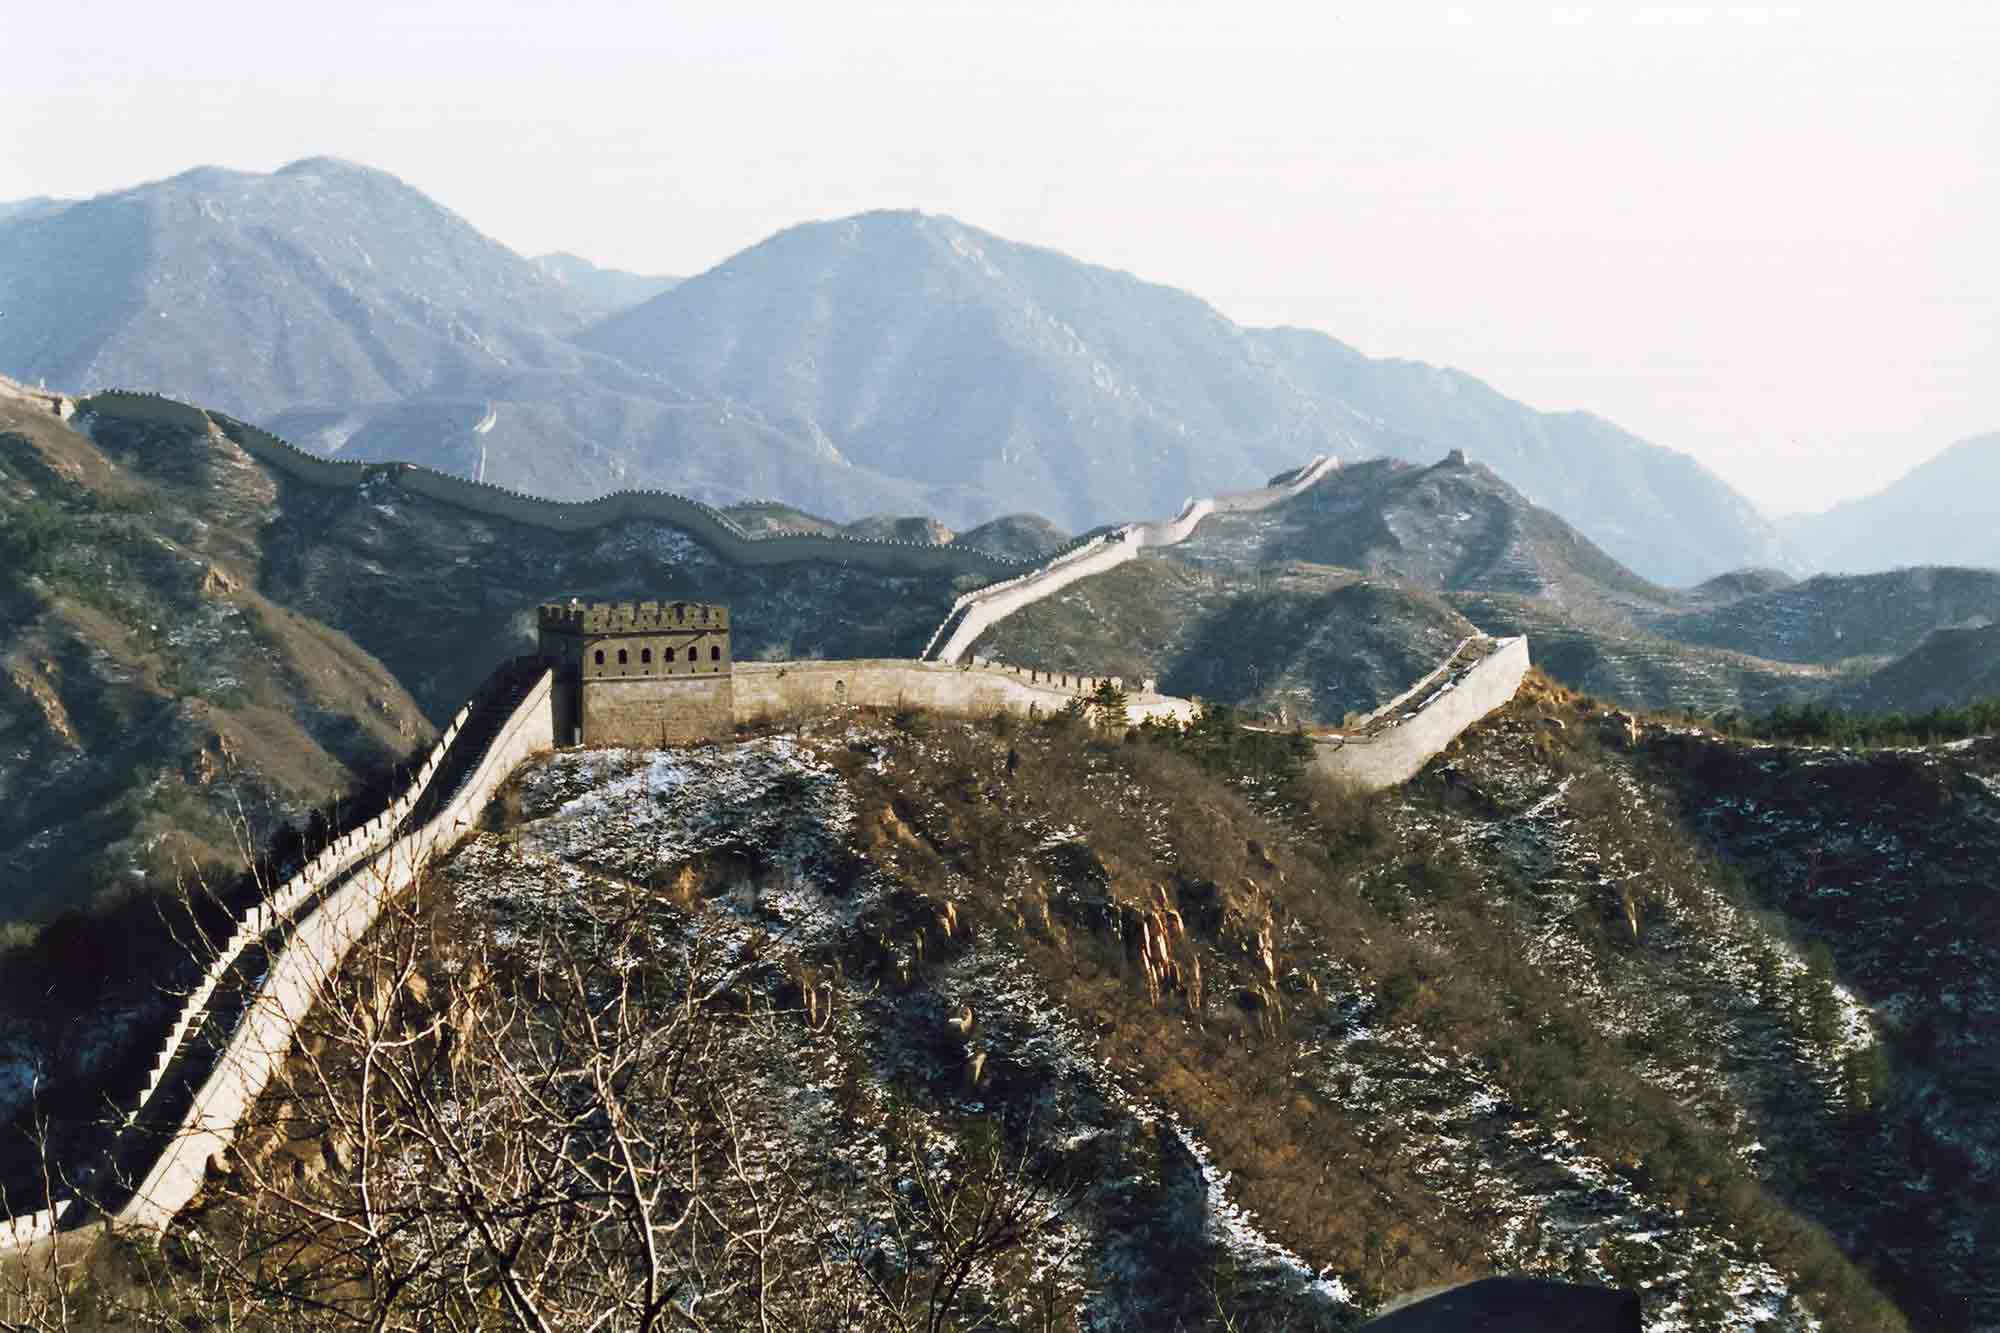 The Great Wall near Beijing, China. © Ulli Maier & Nisa Maier